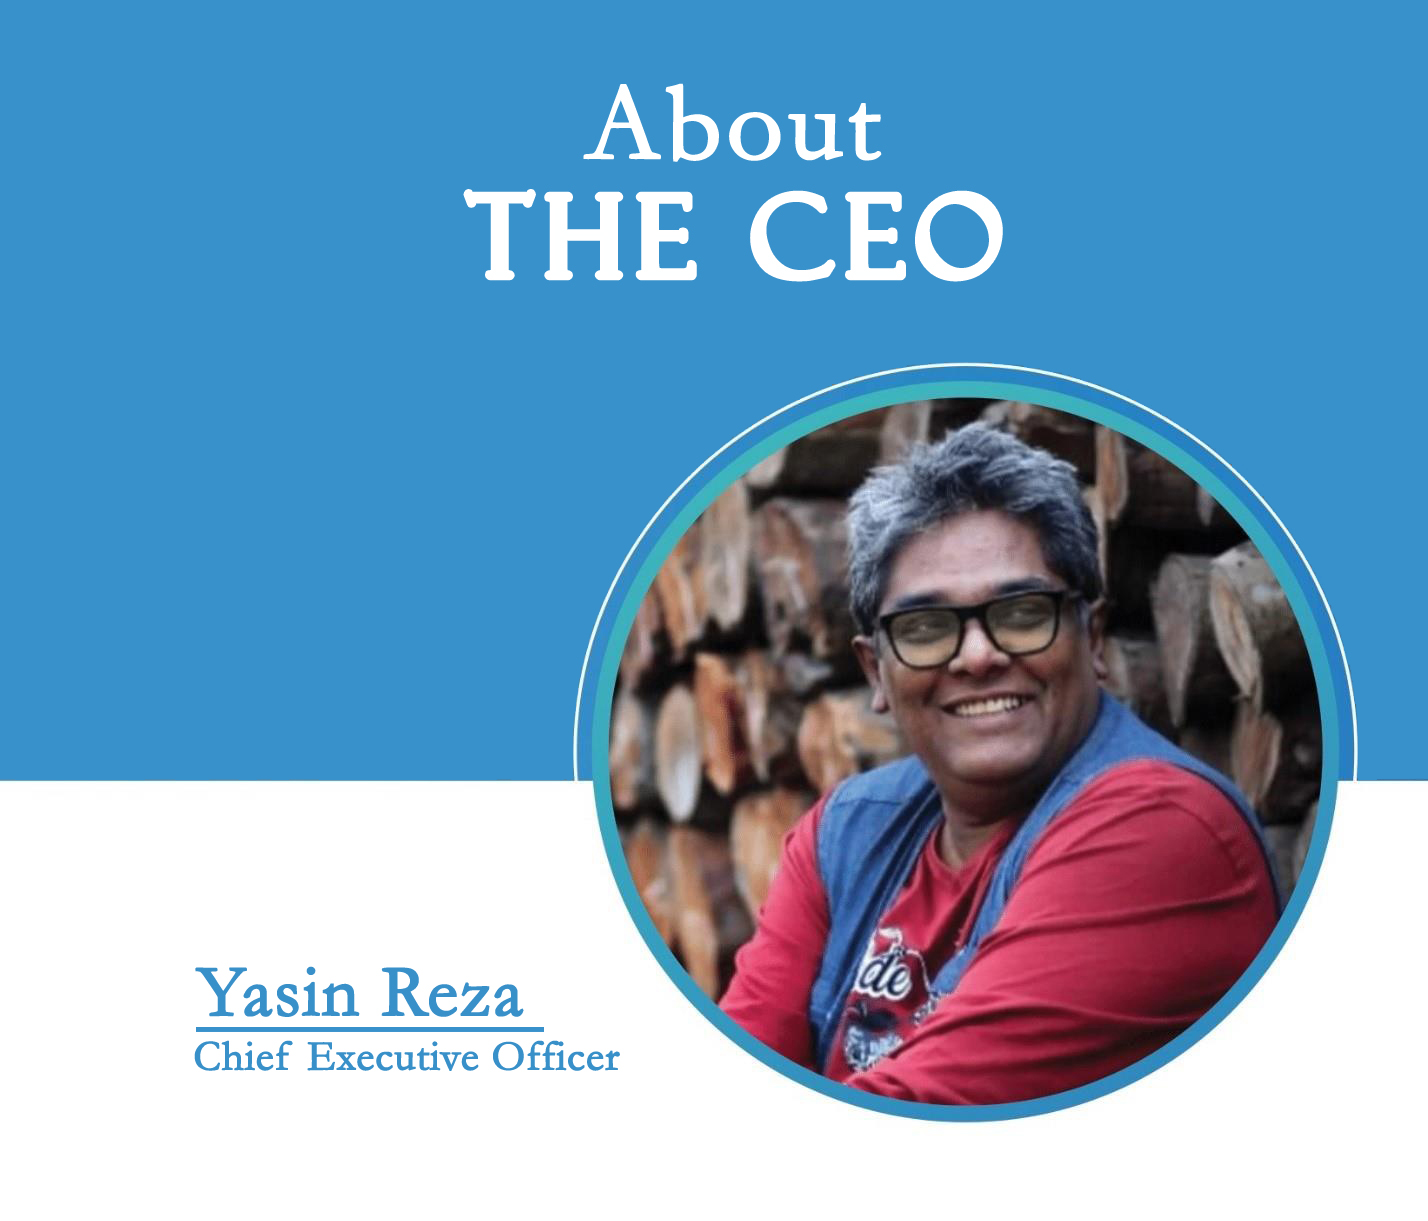 The CEO Yasin Reza